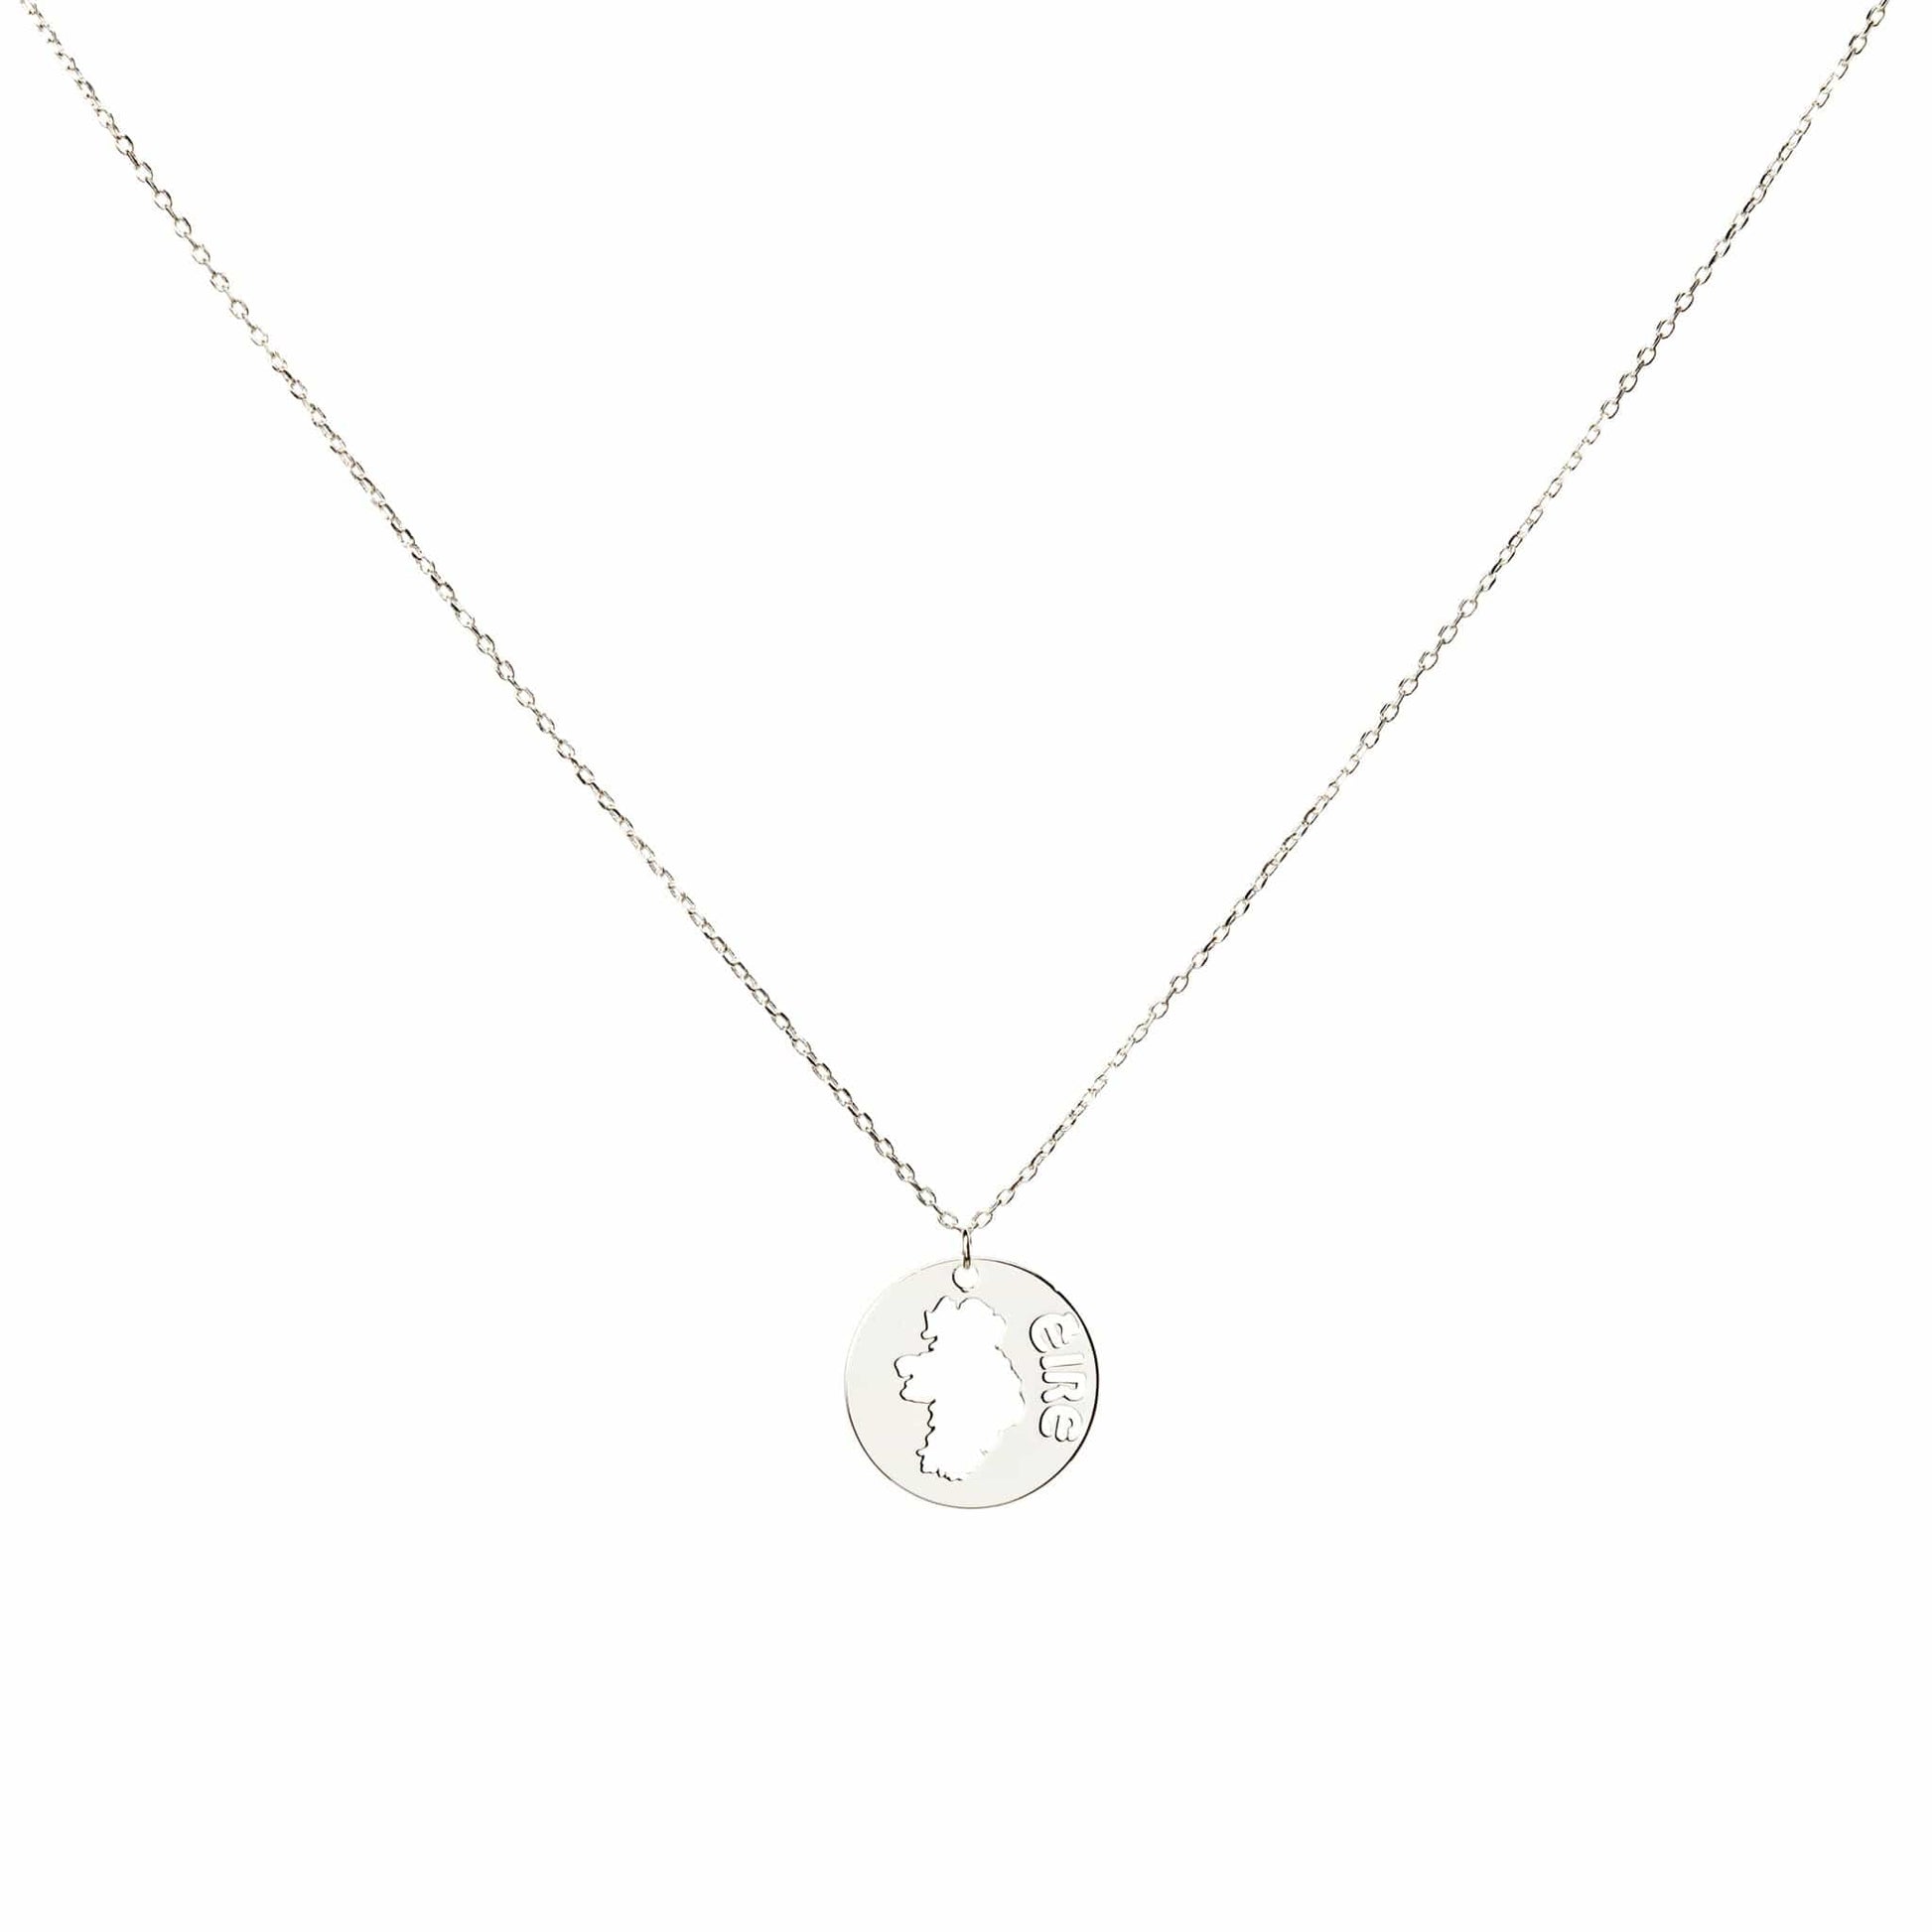 Silver irish map necklace